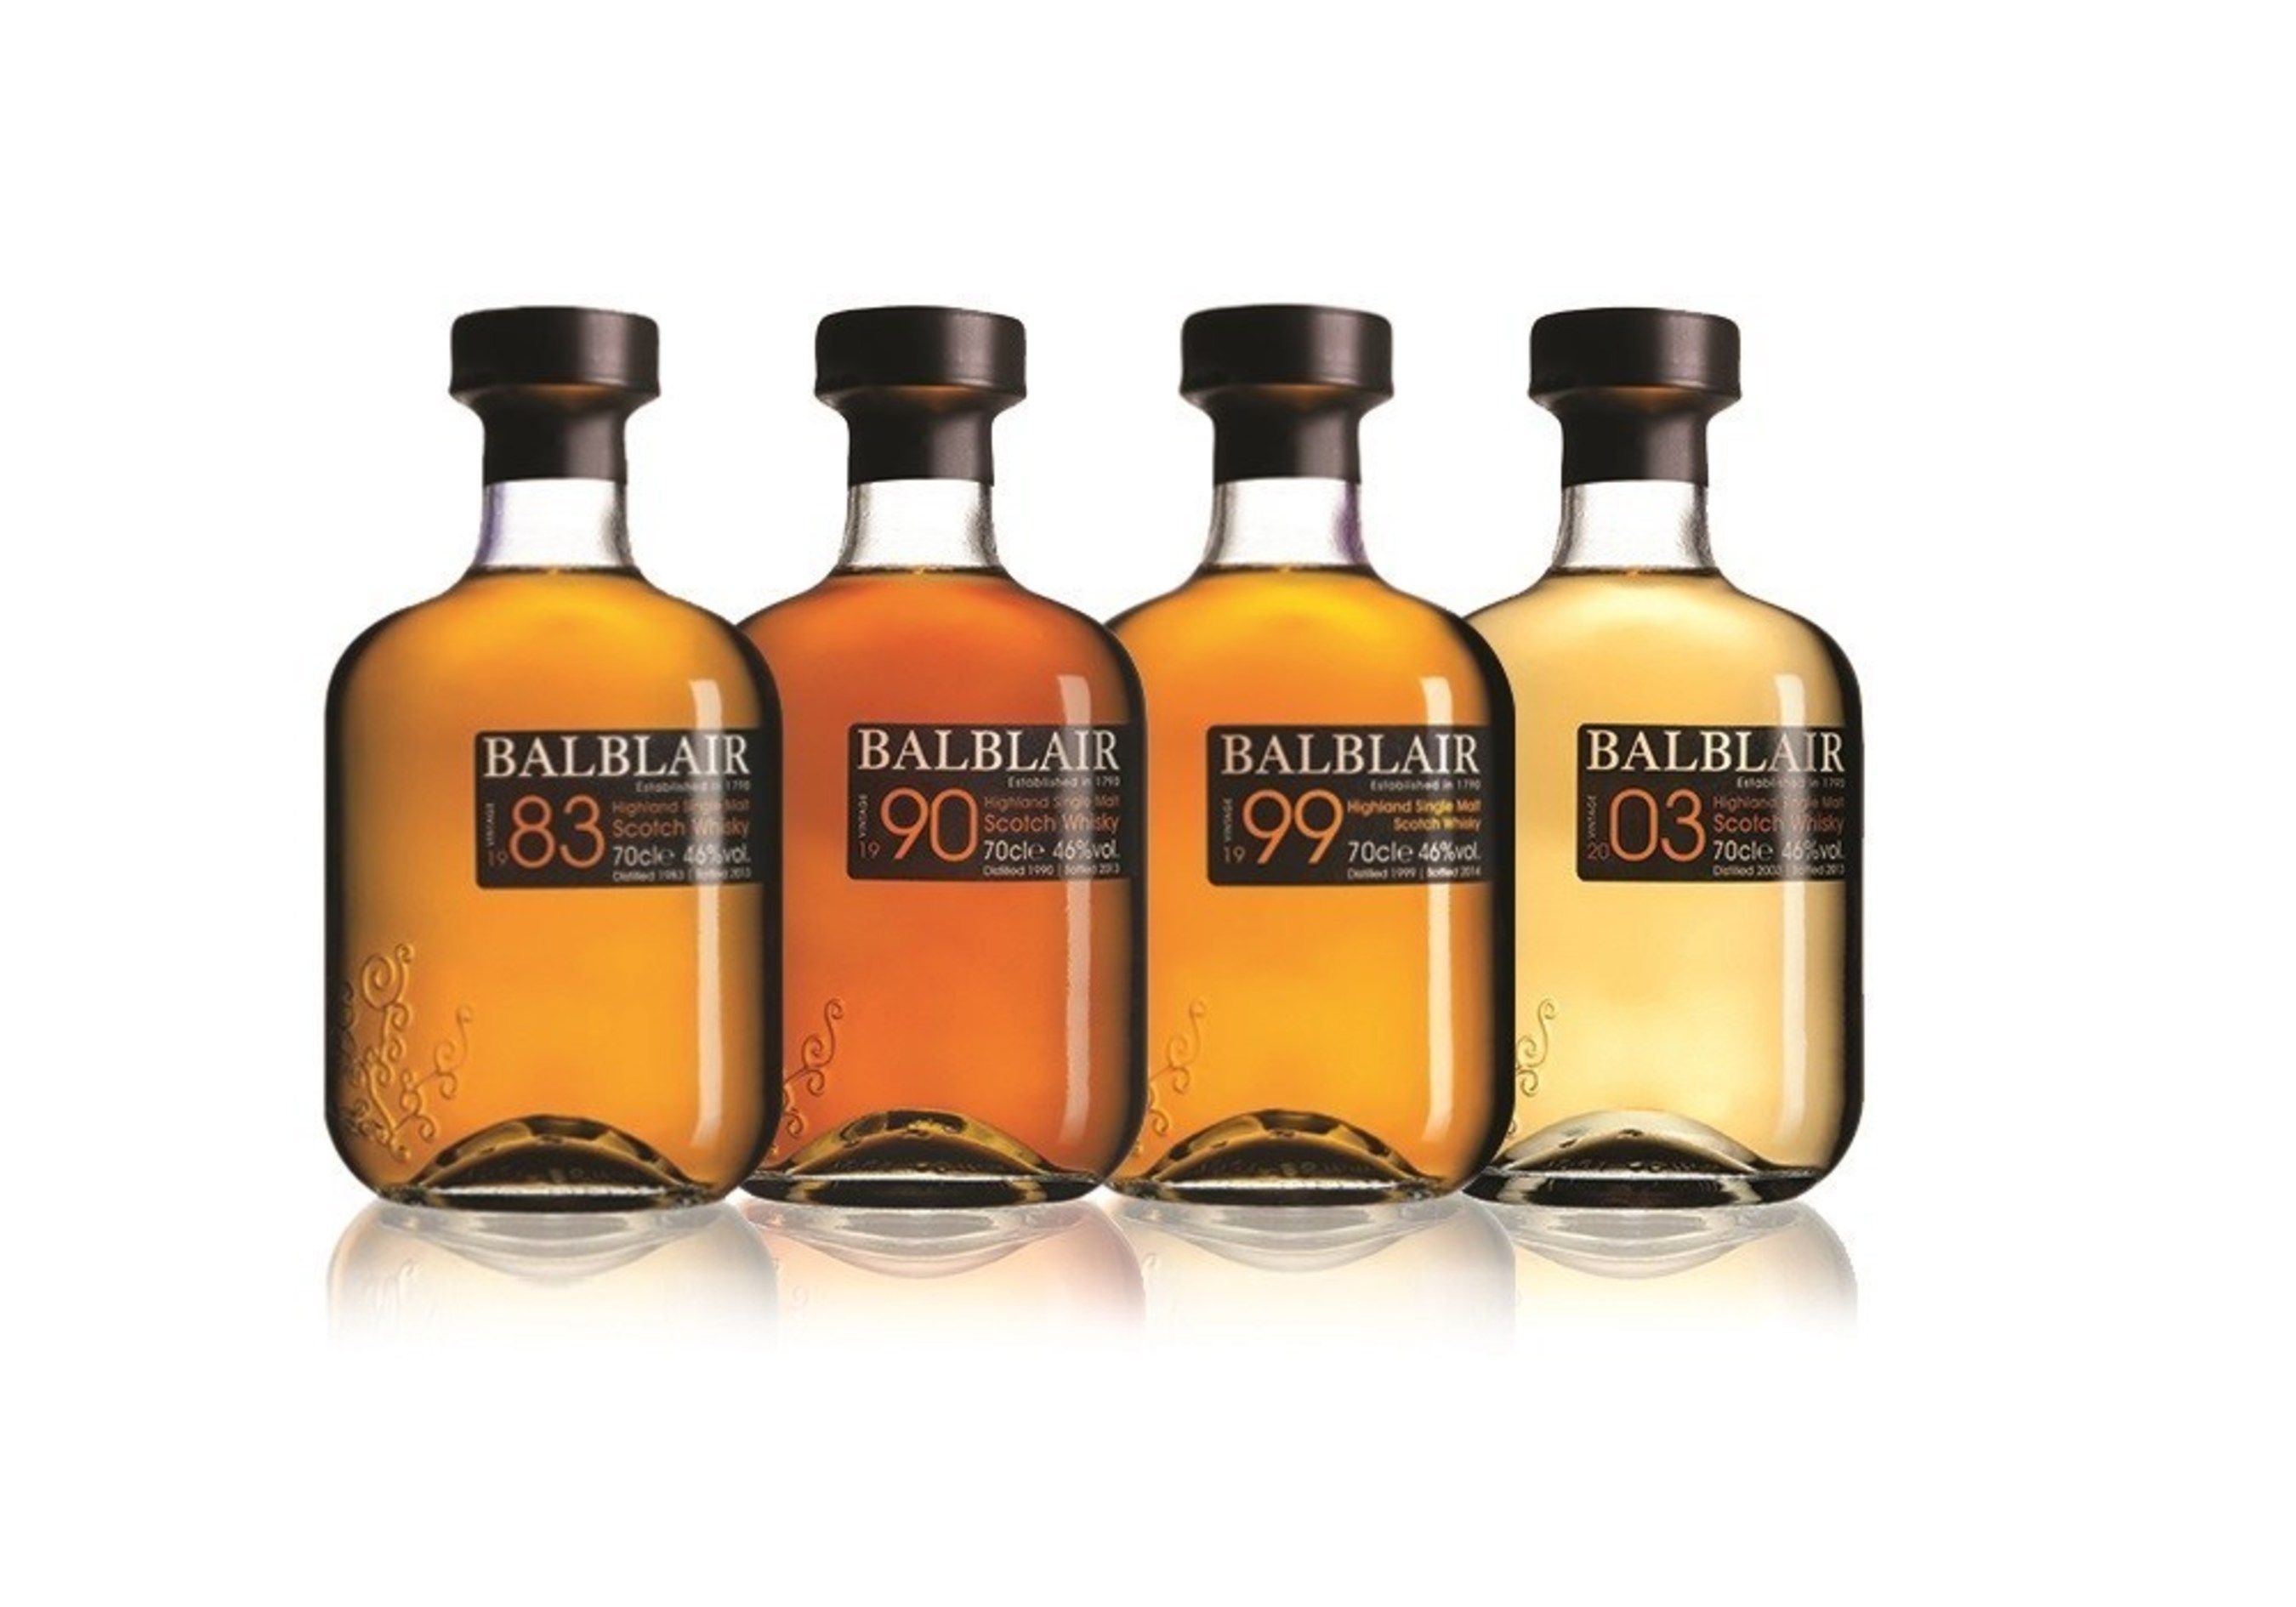 Latest vintage releases from Balblair Single Malt Scotch Whisky distillery